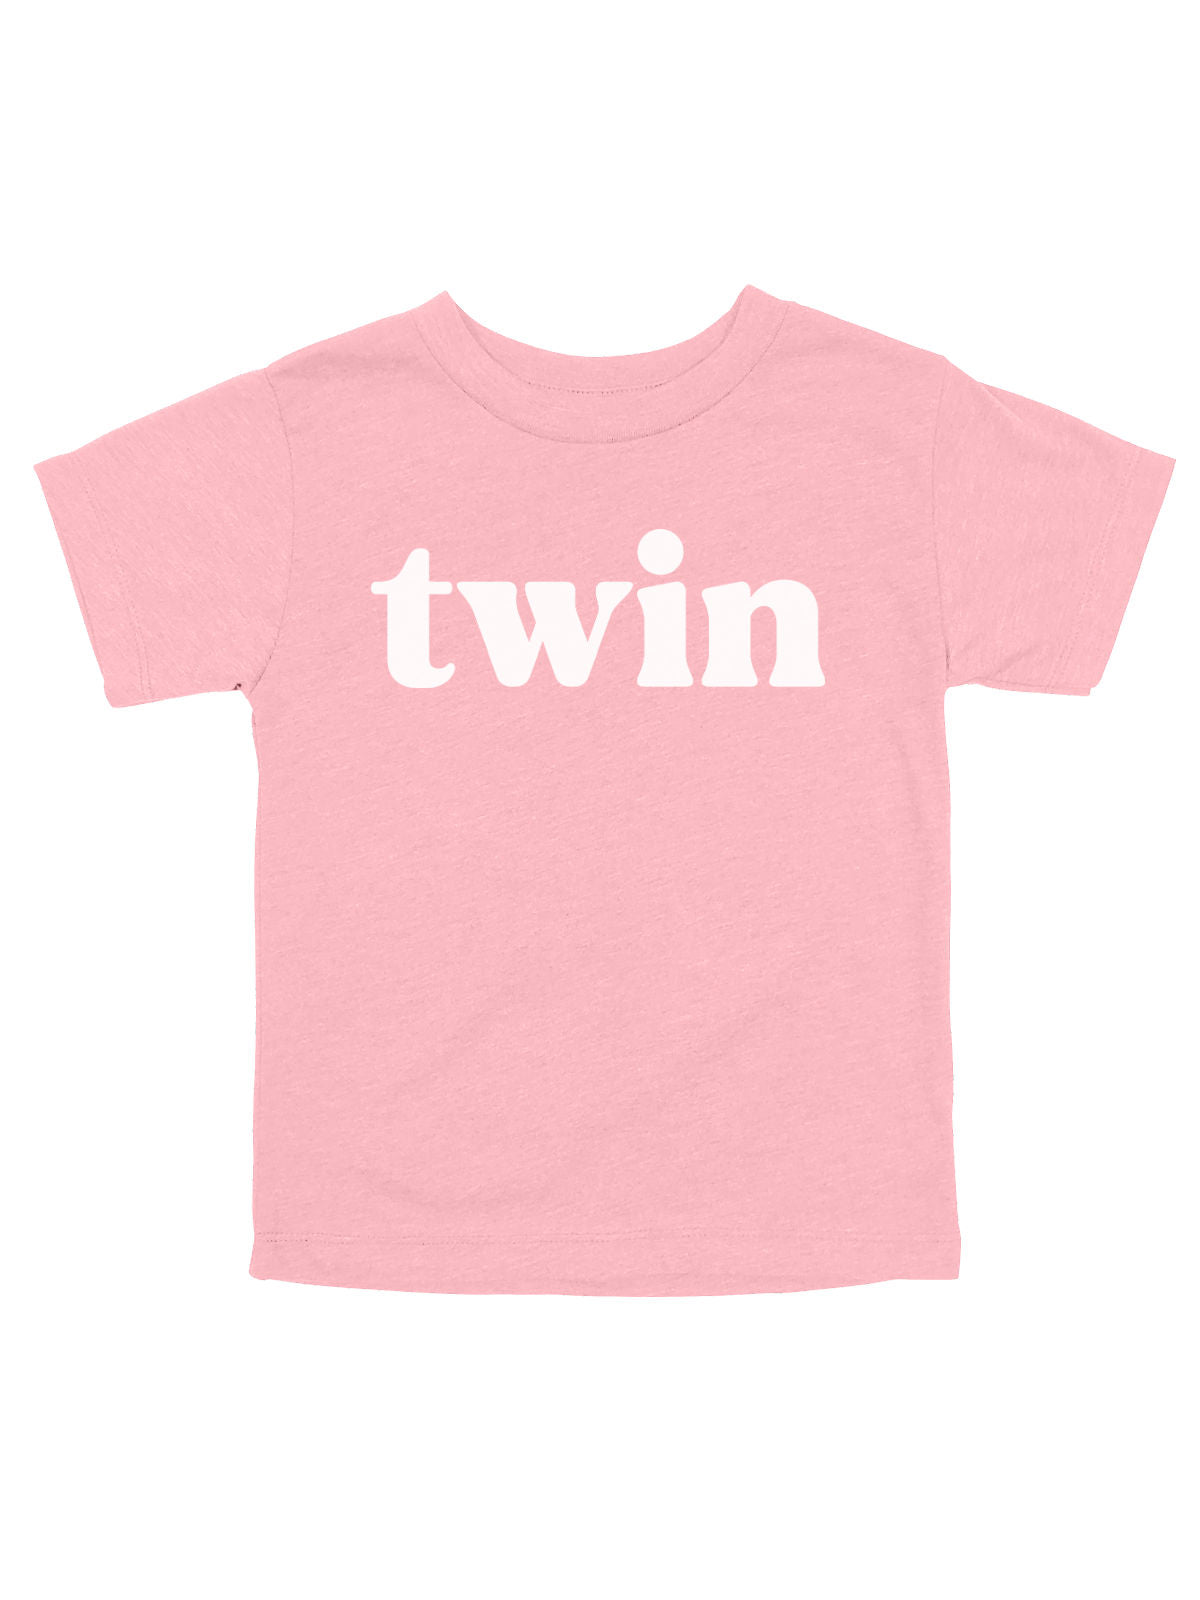 Twin Baby Girl Bodysuit in Pink